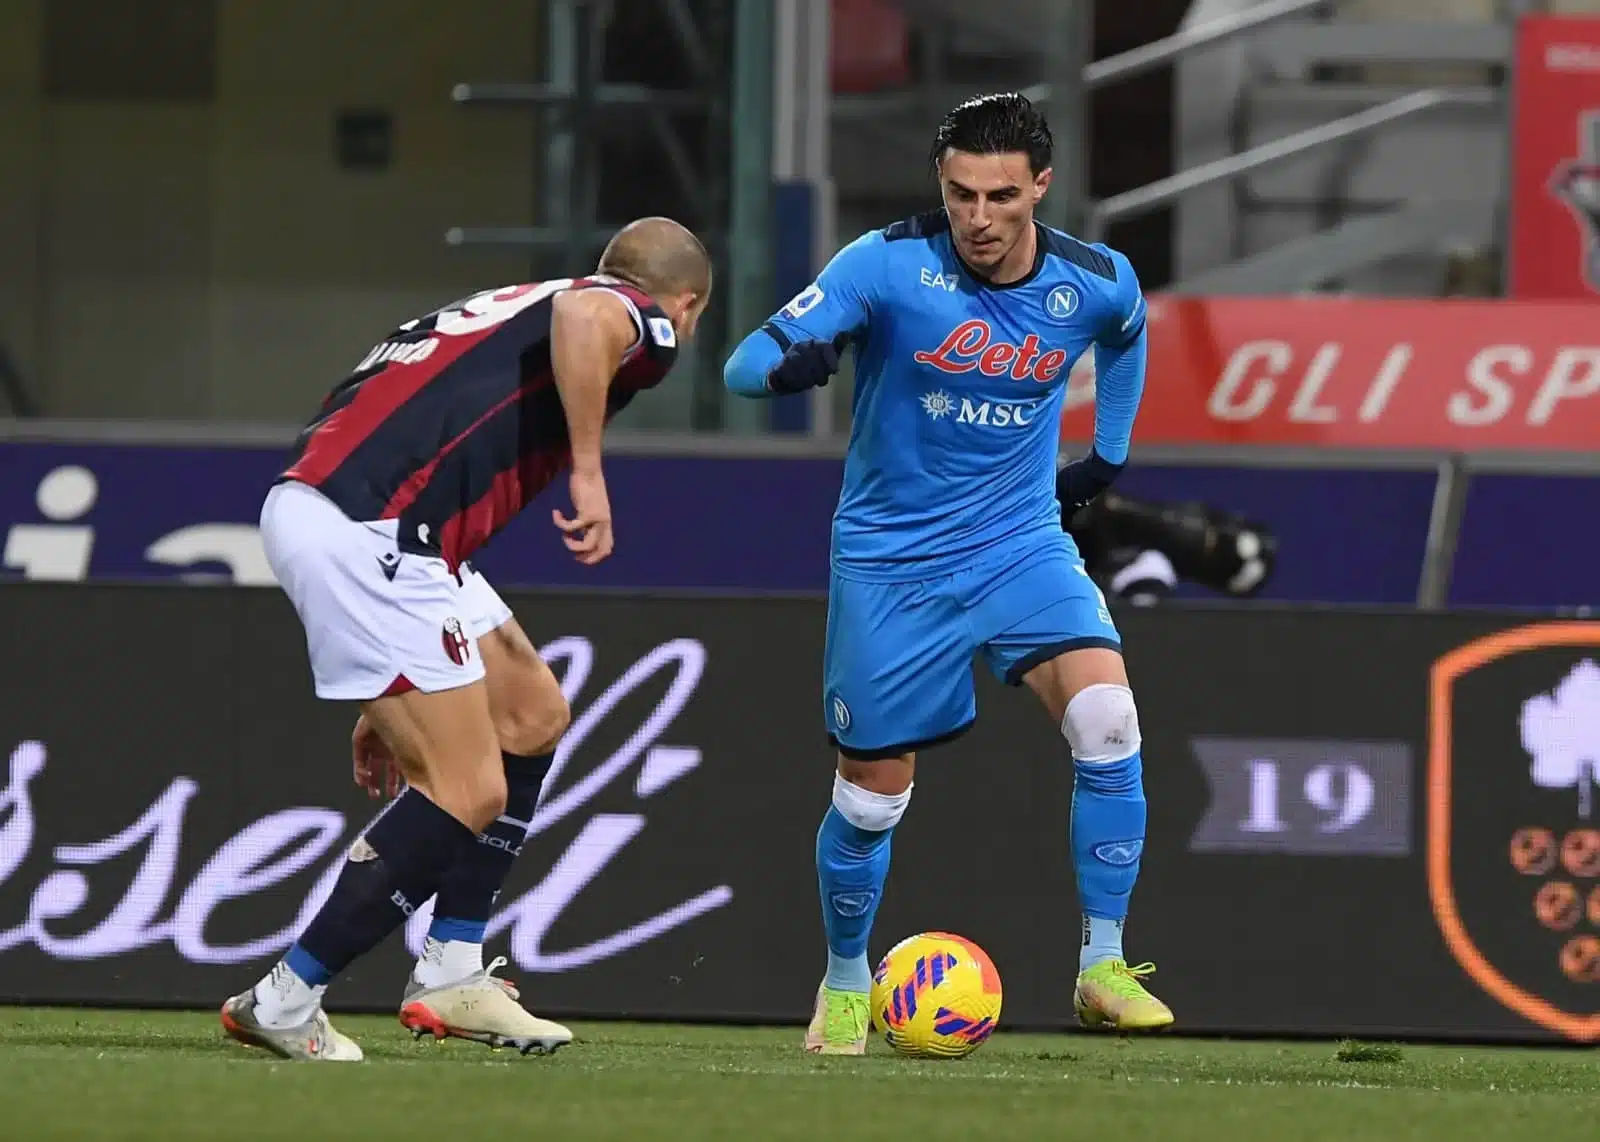 Napoli x Genoa: Saiba como assistir ao jogo do Italiano AO VIVO